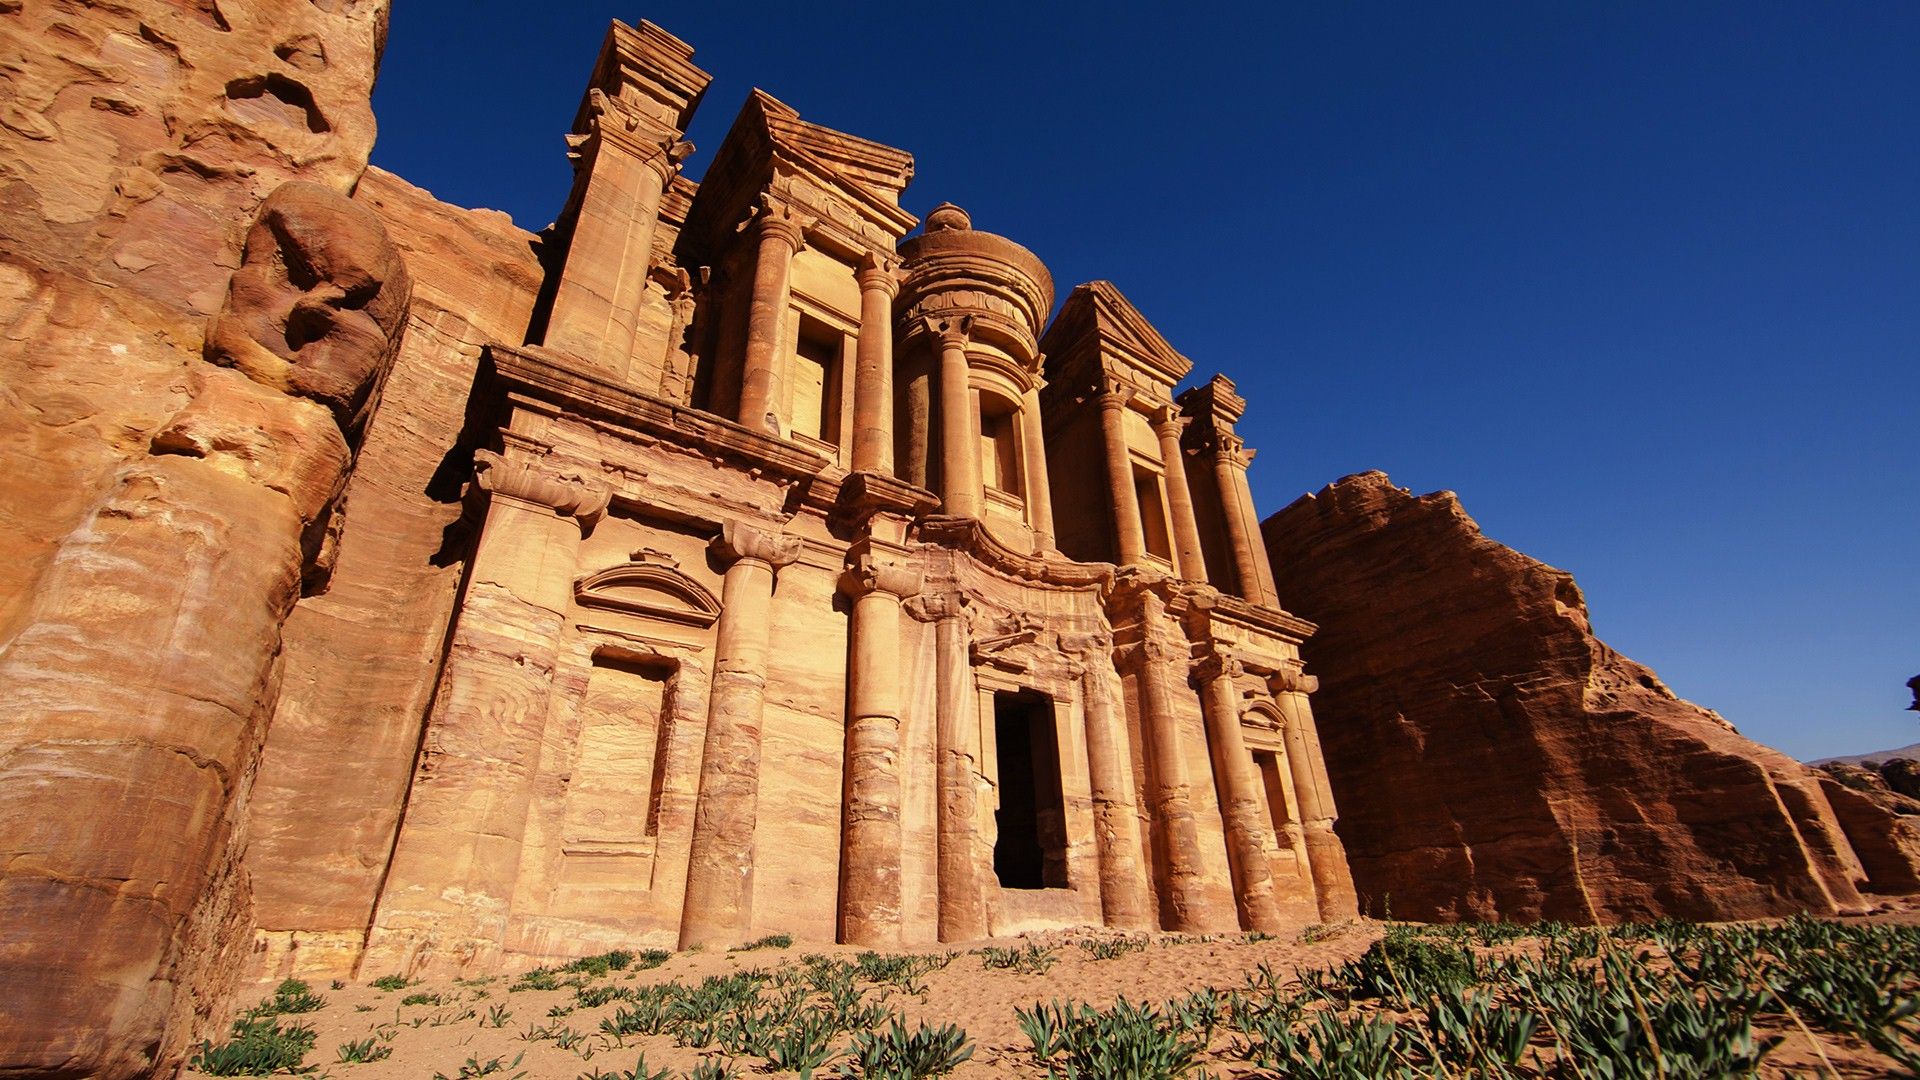 Petra Historical Place In Jordan Photo .teahub.io